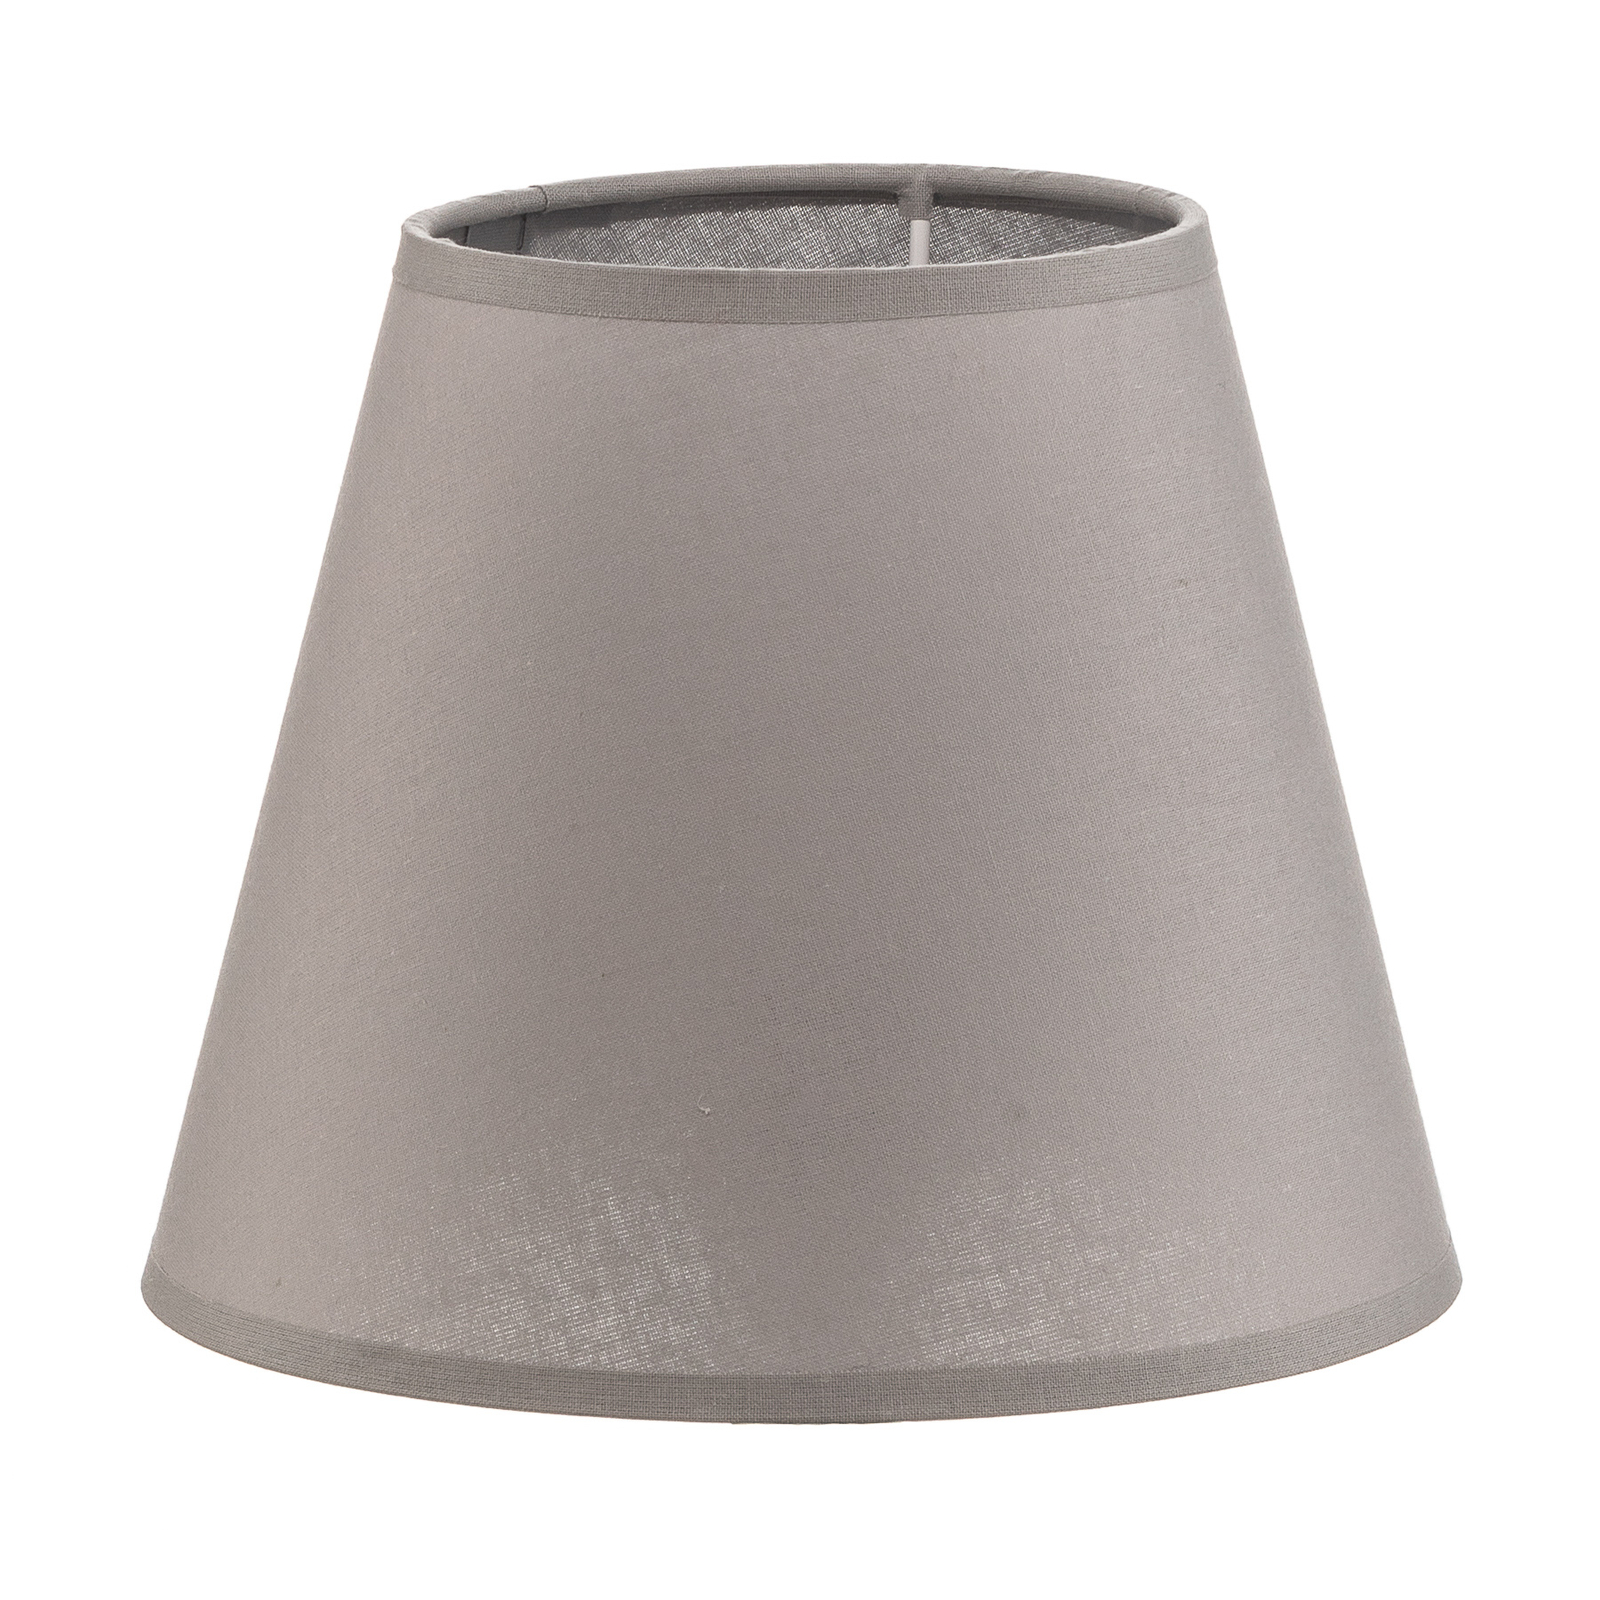 Sofia lampshade height 15.5 cm, grey/white